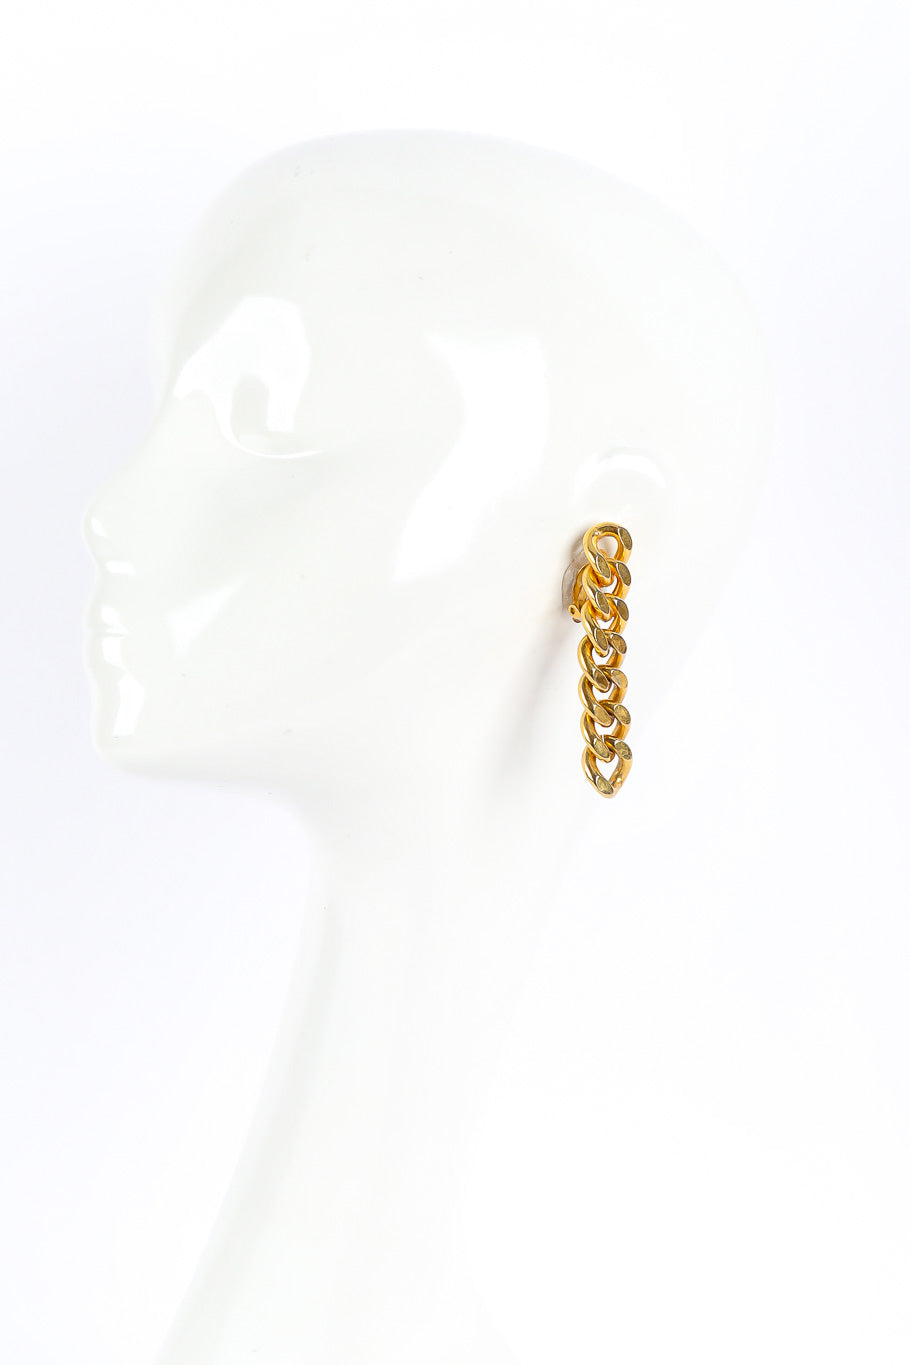 Curb chain link drop earrings by Premier Etage on mannequin @recessla